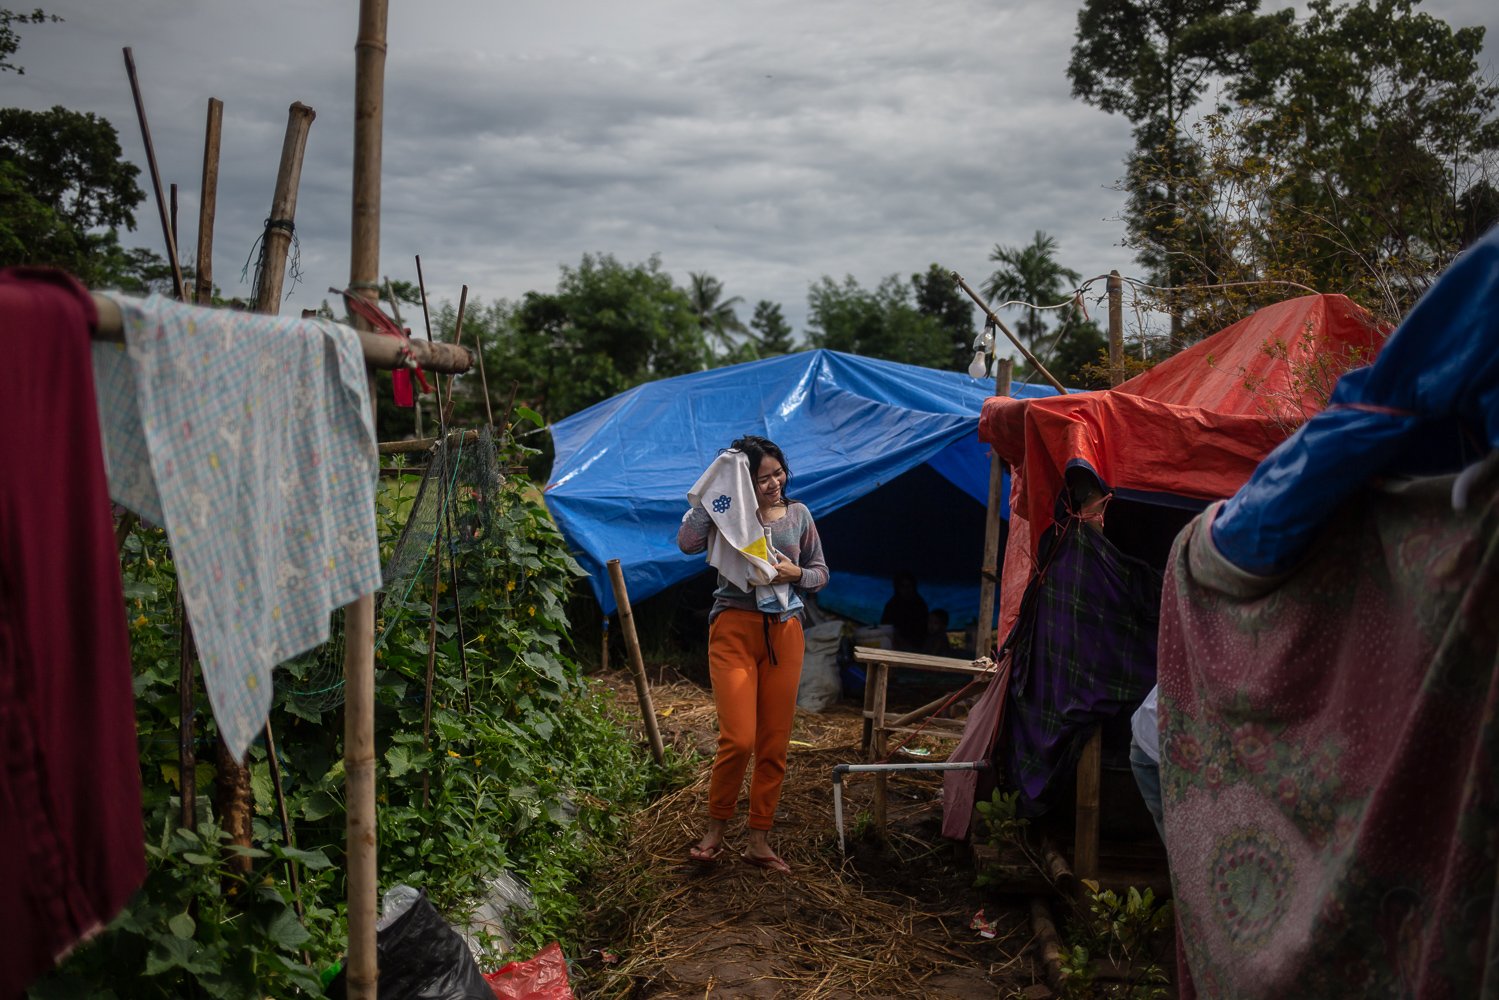 Sejumlah pengungsi berjalan di tenda pengungsian pasca gempa bumi dengan magnitude 5.6 di Desa Gasol, Cugenang, Cianjur, Jawa Barat, Jumat (25/11). Badan Nasional Penanggulangan Bencana (BNPB) mencatat total 321 orang meninggal dunia, jumlah pengungsi hingga hari ini mencapai 73.874 orang akibat gempa di Cianjur.